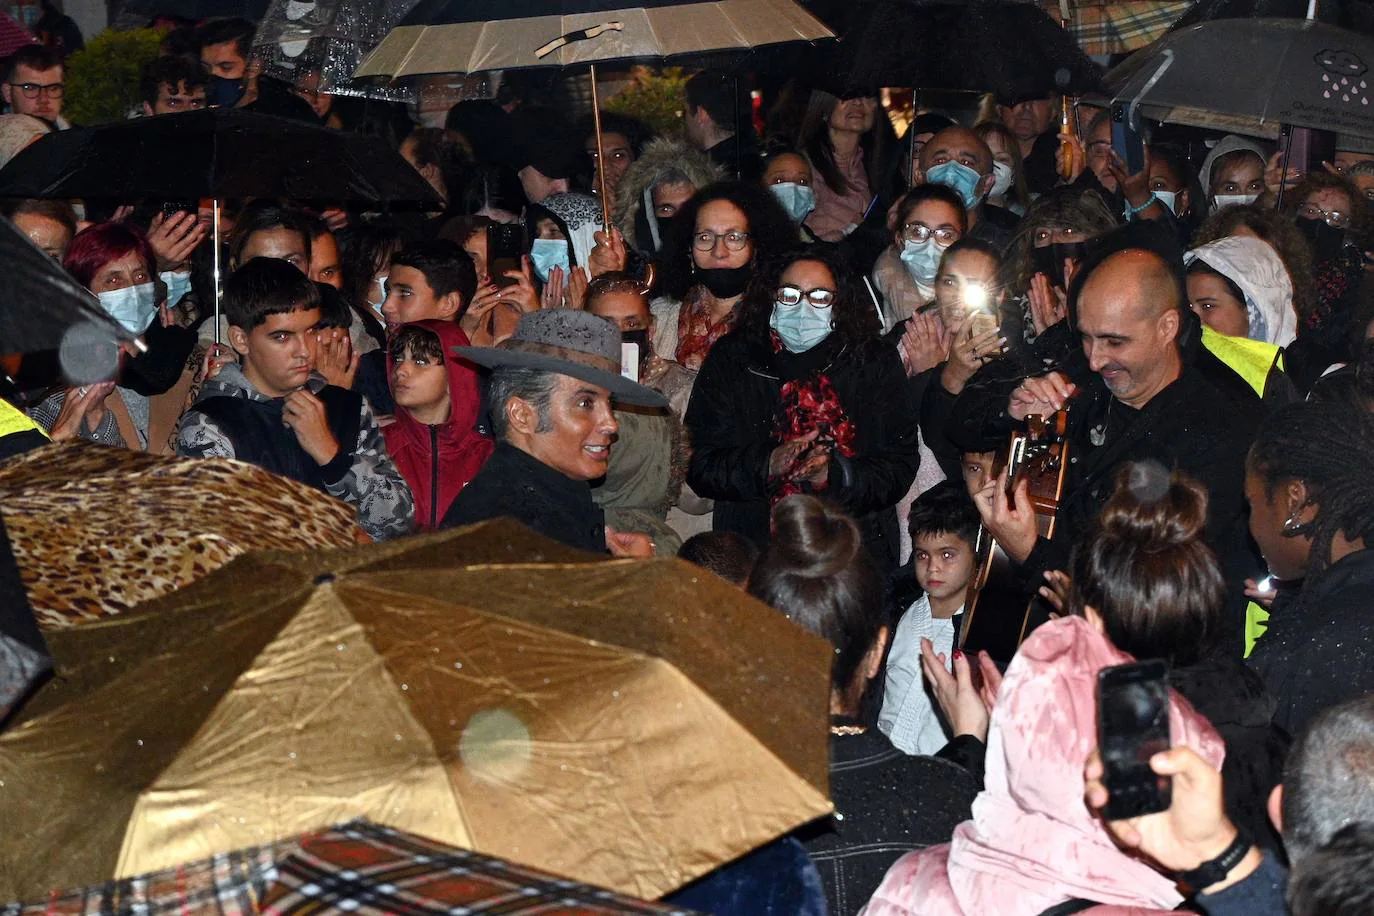 Crowds gathered at Marbella's Christmas lights despite the threat of rain.